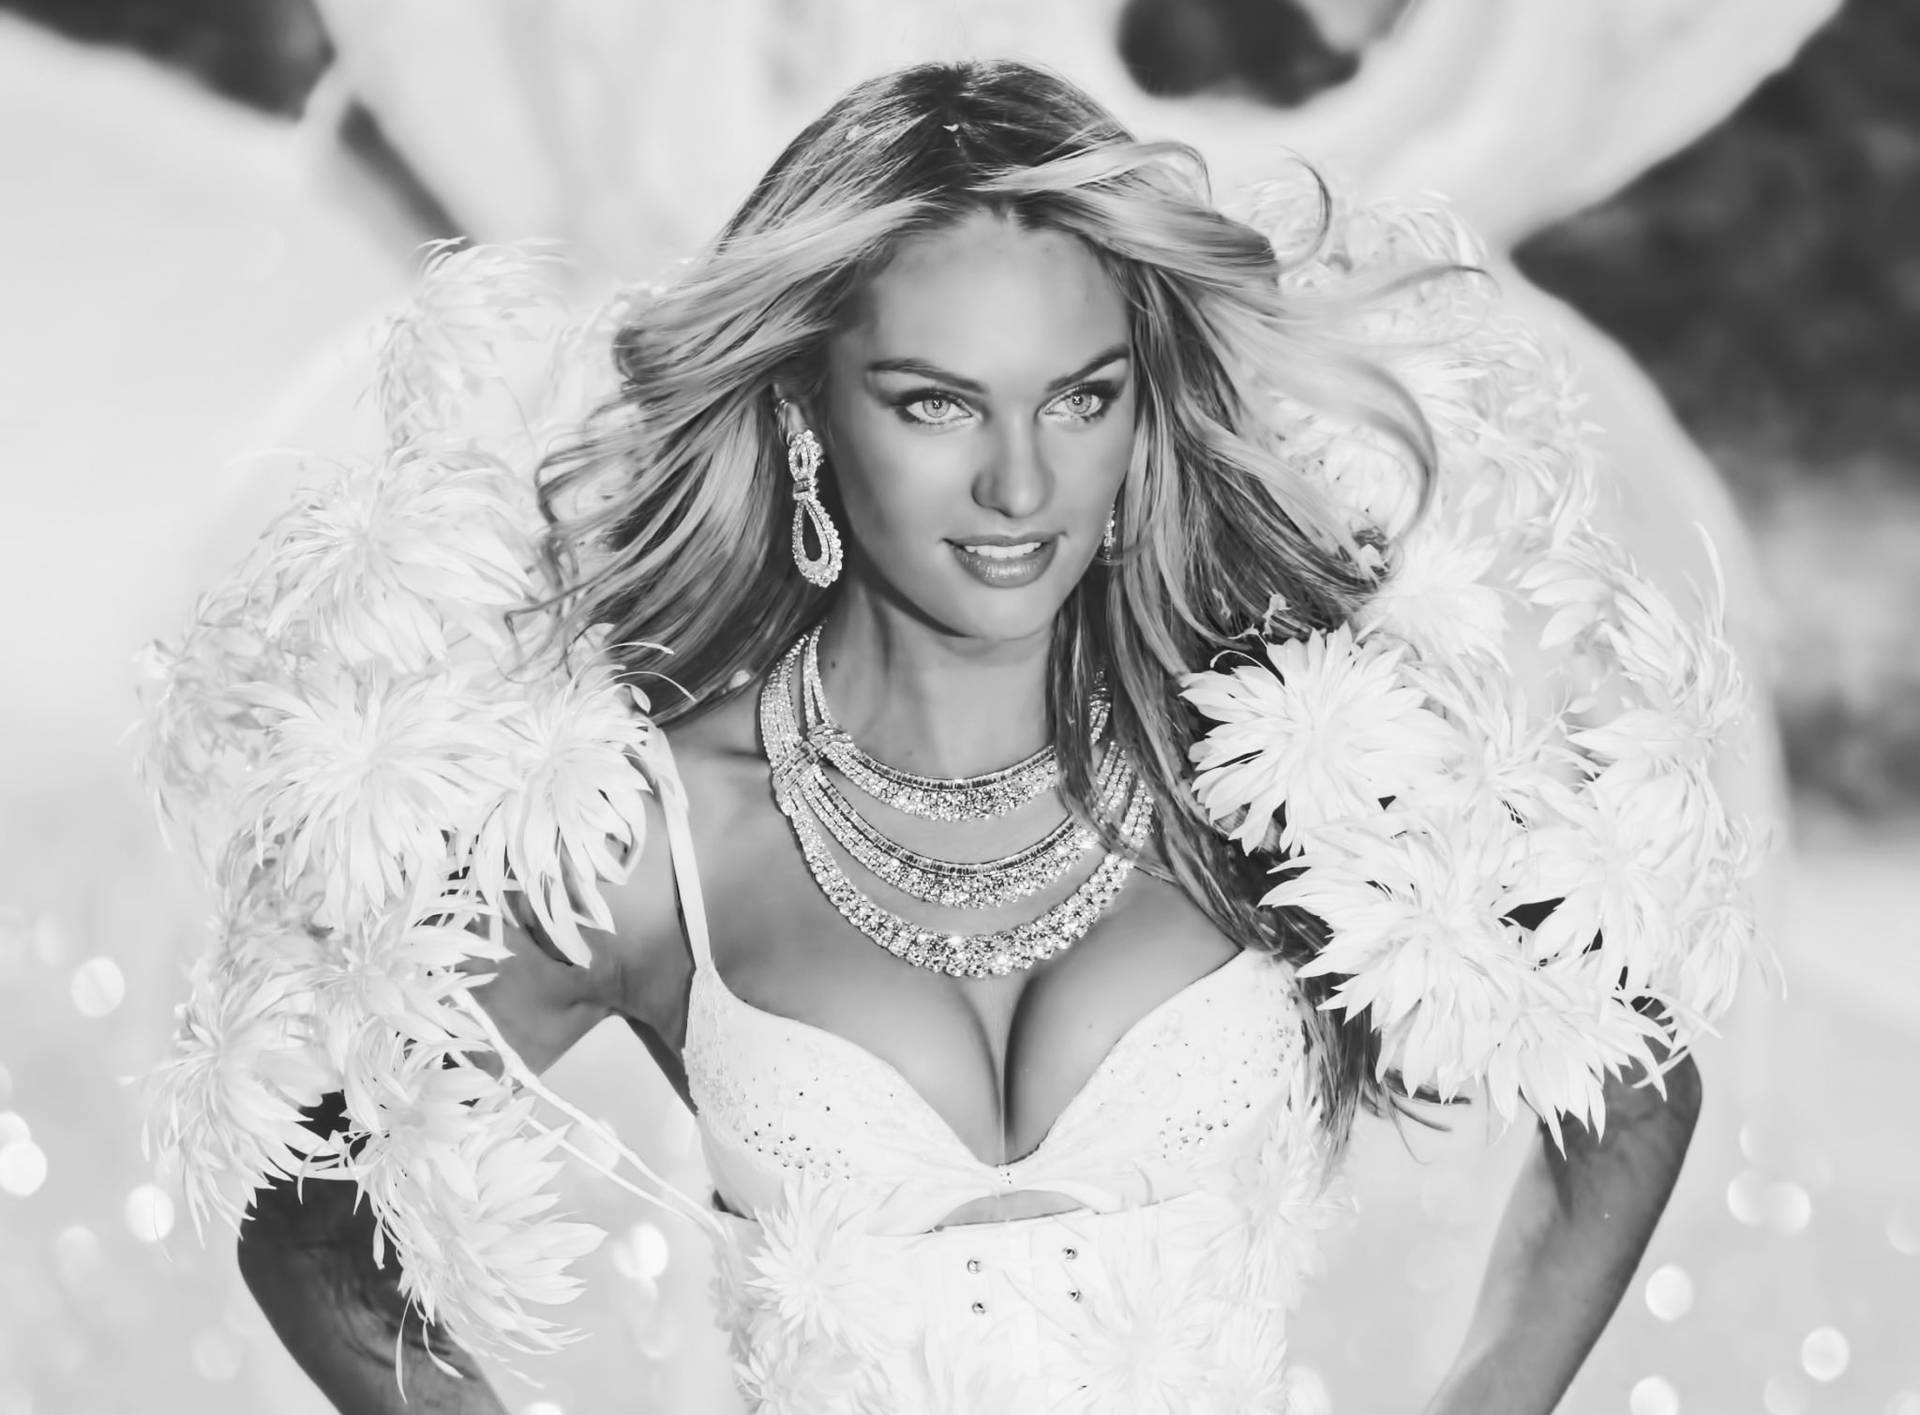 Victoria’s Secret Angel Candice Swanepoel Looking Stunning In Her Photoshoot. Background